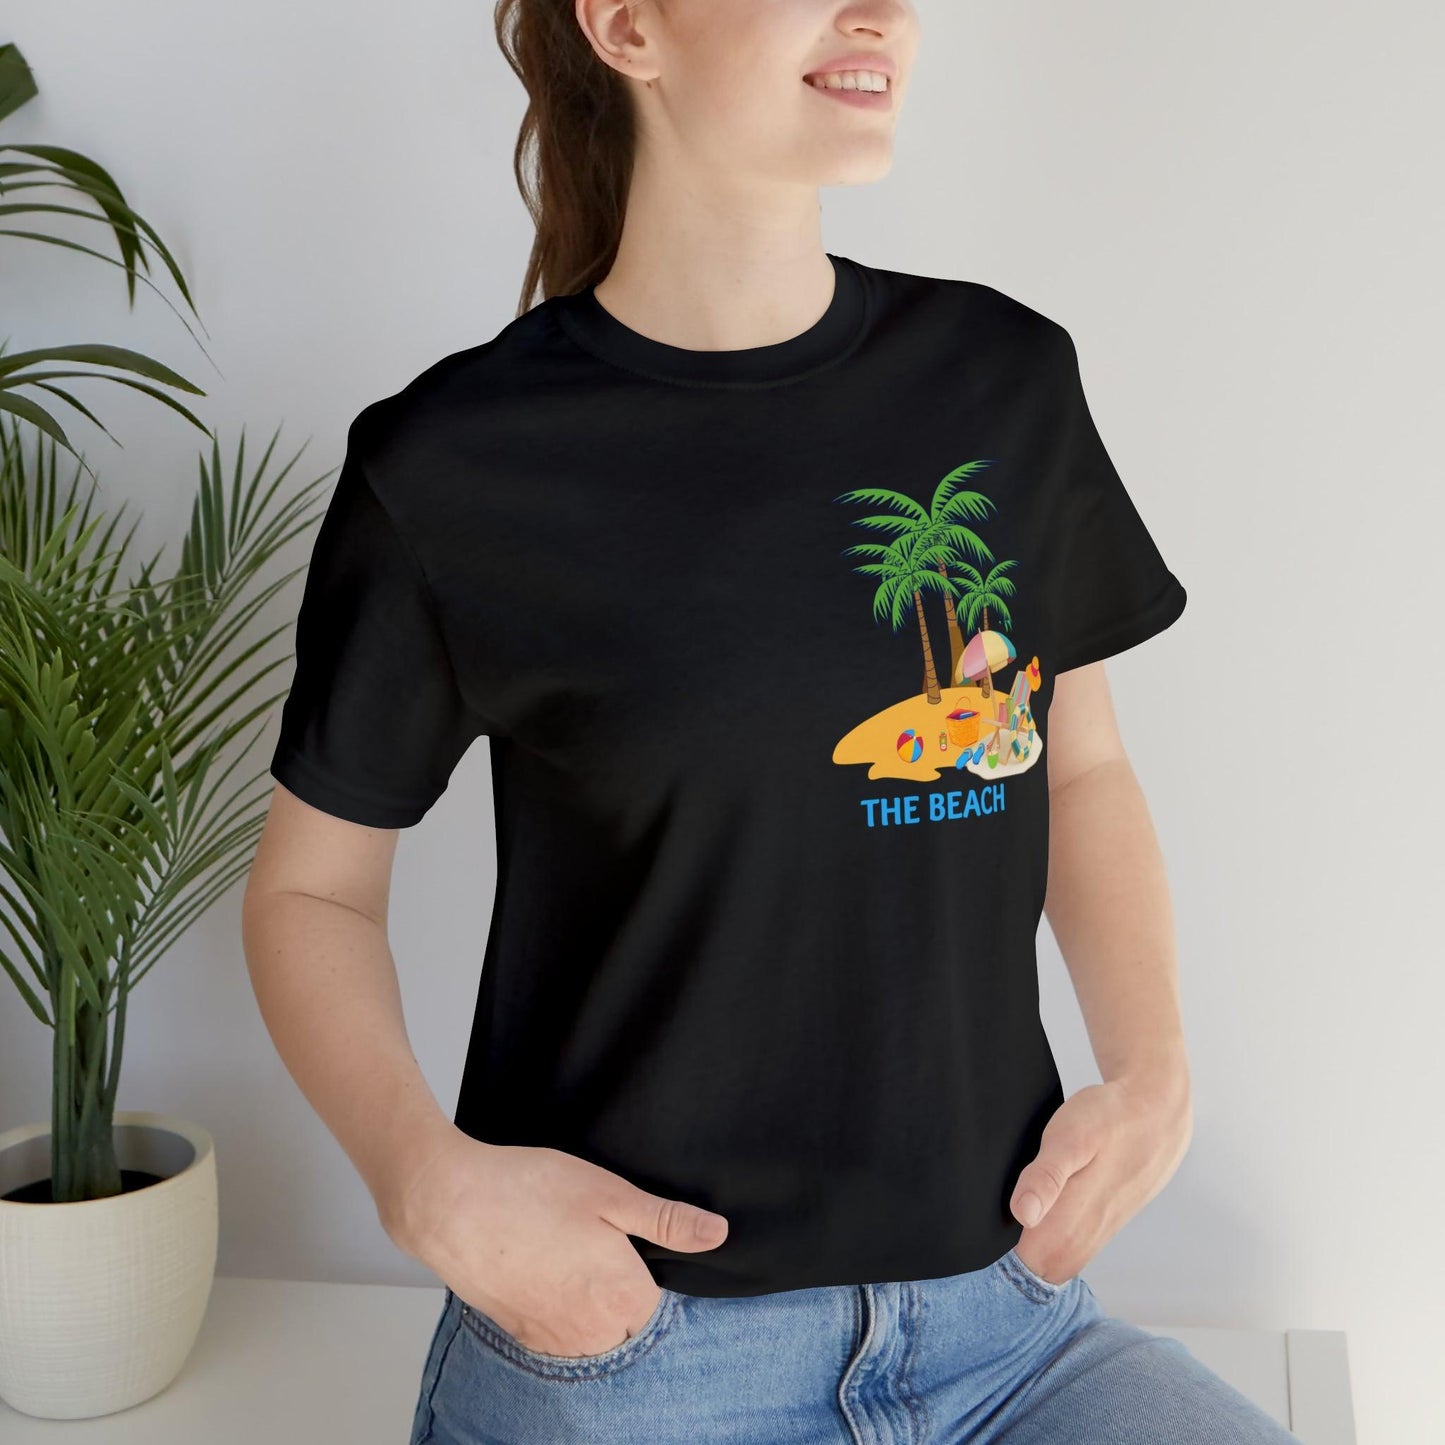 Beach shirt, The Beach is My Happy Place shirt, Beach t-shirt, Summer shirt - Giftsmojo